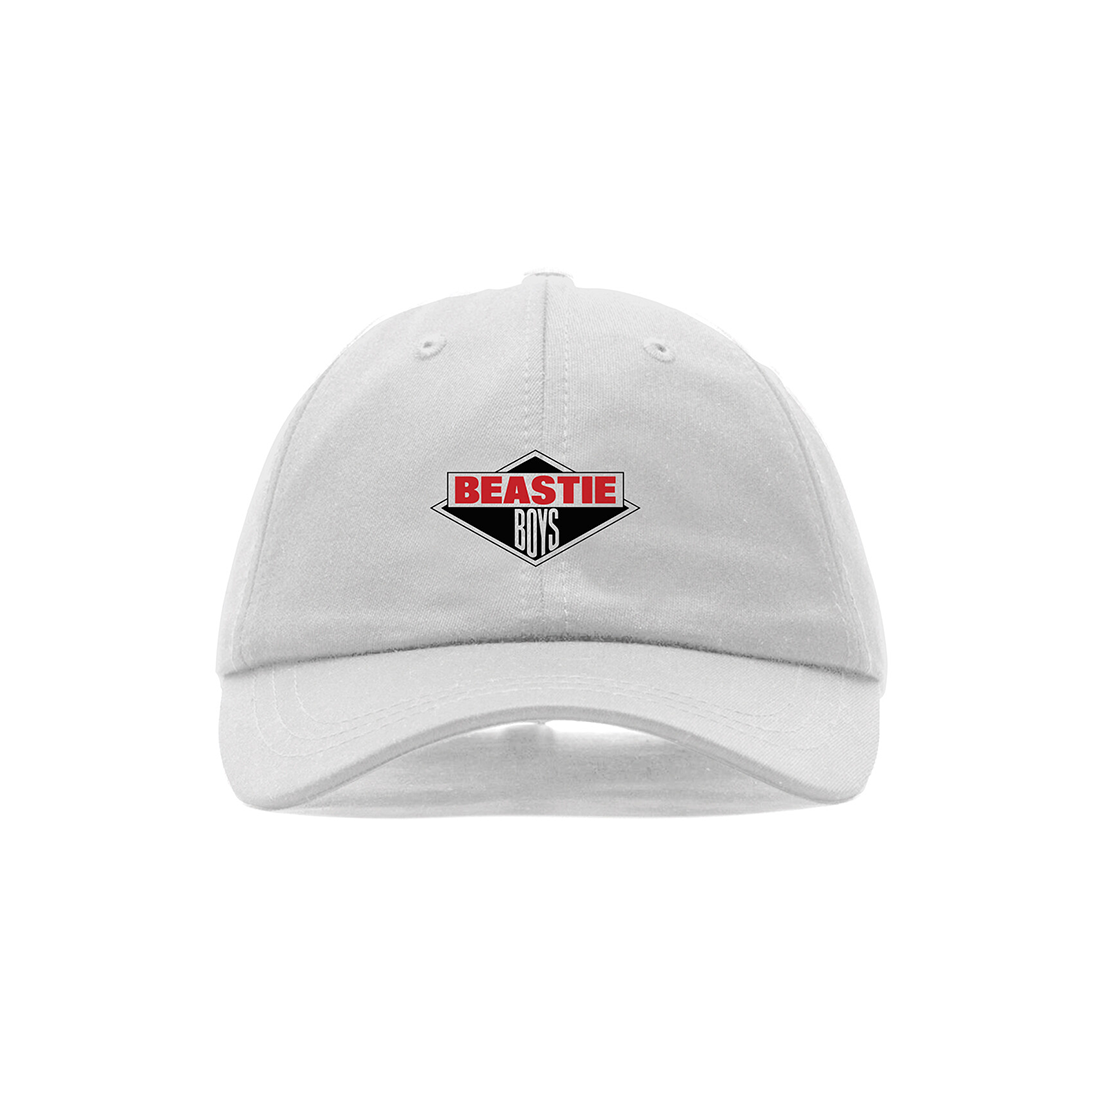 Beastie Boys - White BB shield hat